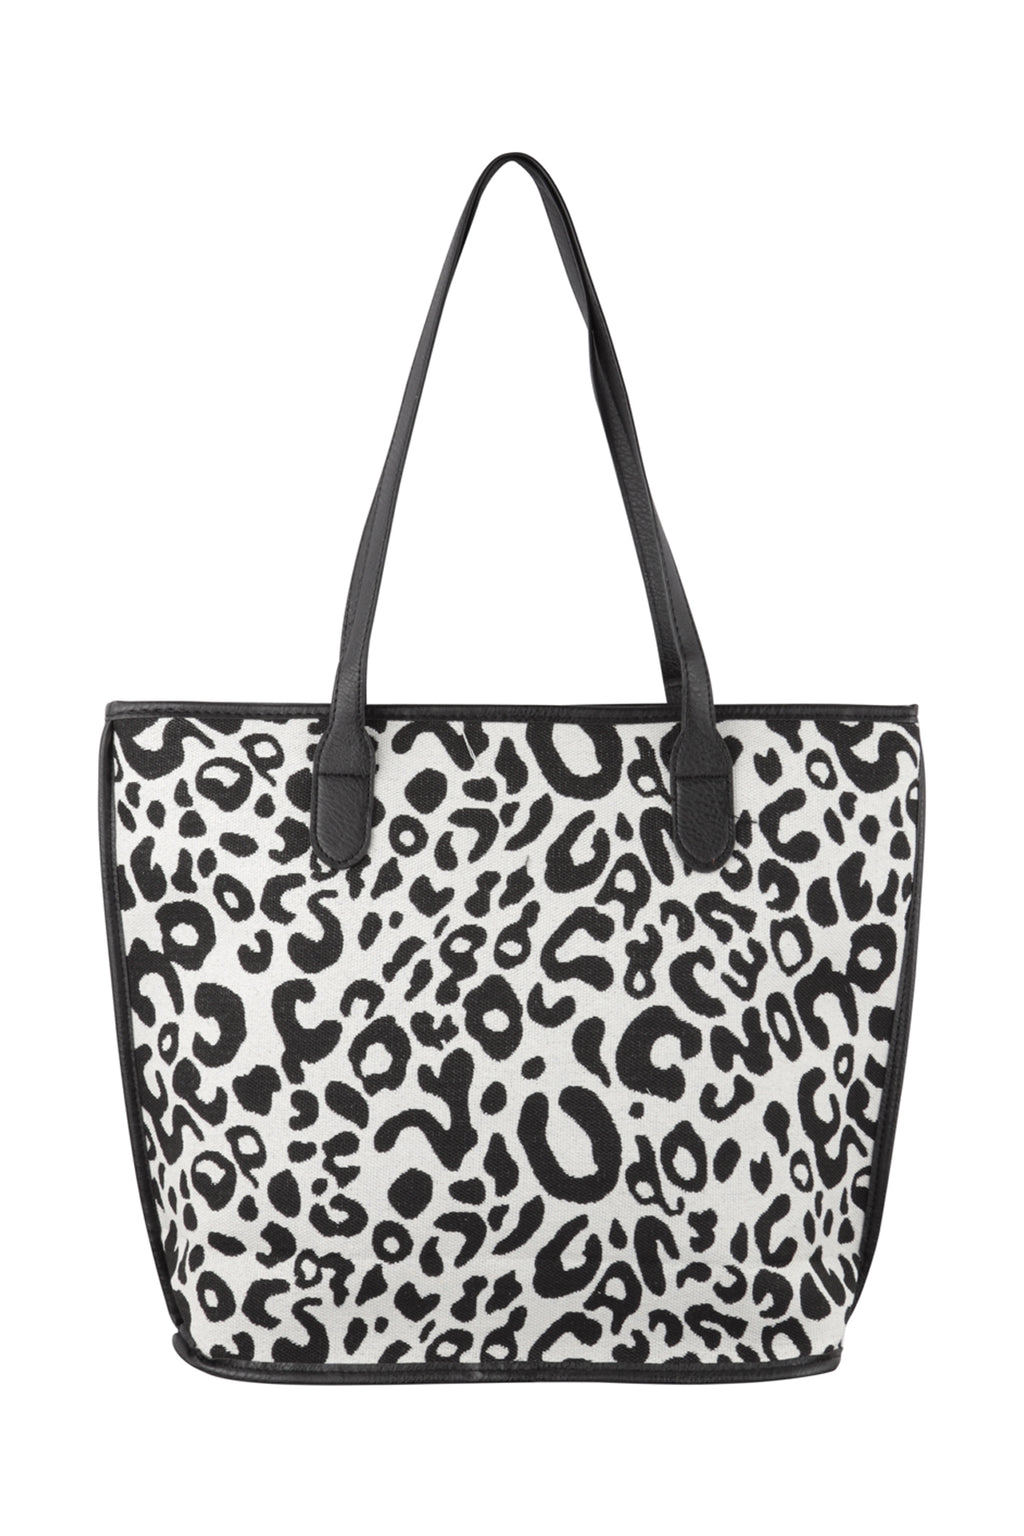 Leopard Print Tote Bag Black - Pack of 6